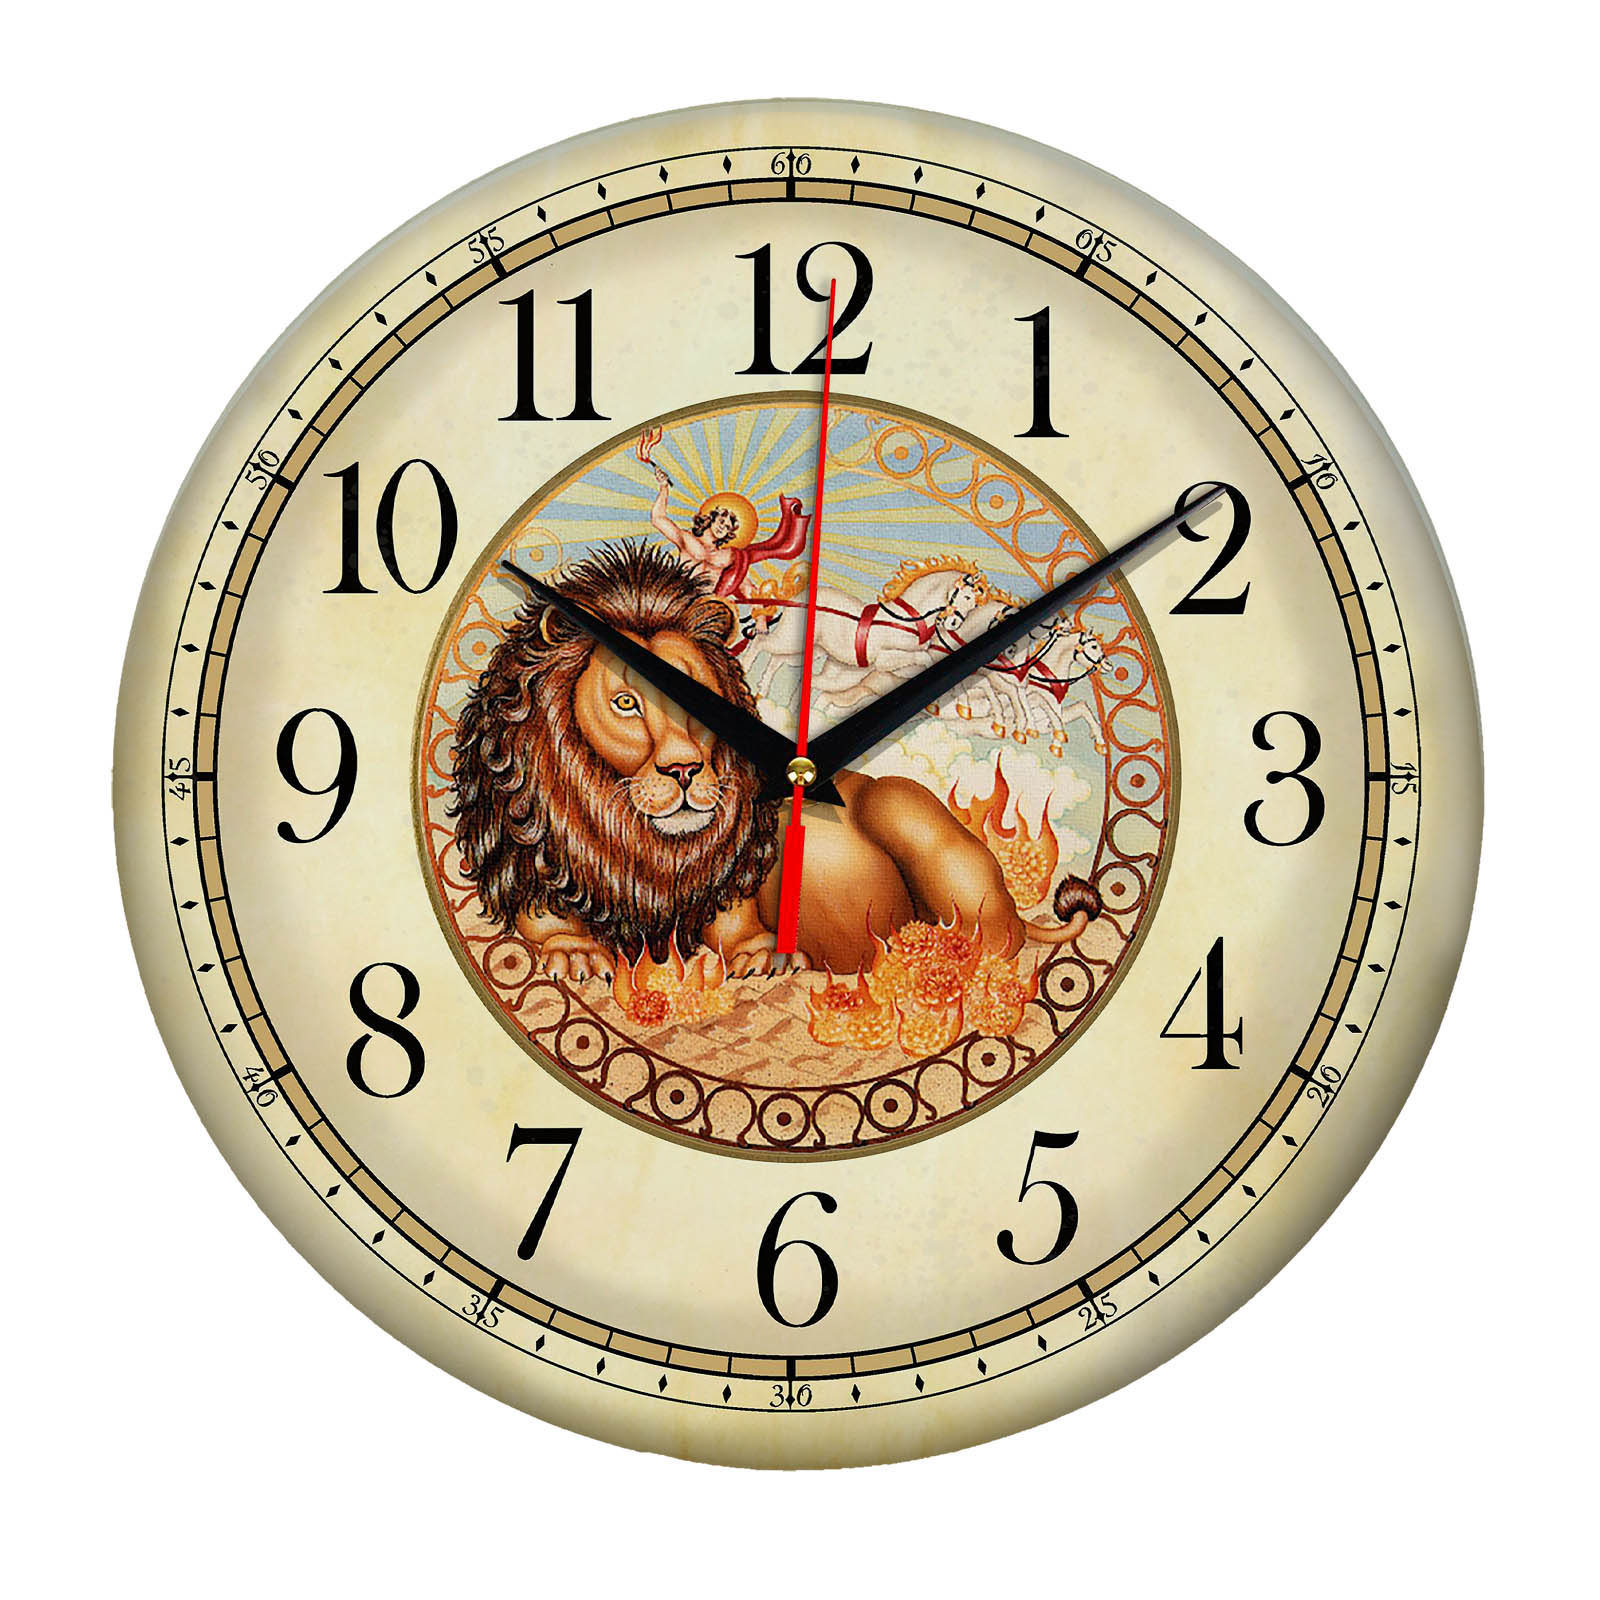 Часы зодиак. Часы Zodiac. Часы сувенир. Часы настенные сувенирные. Часы со знаками зодиака.